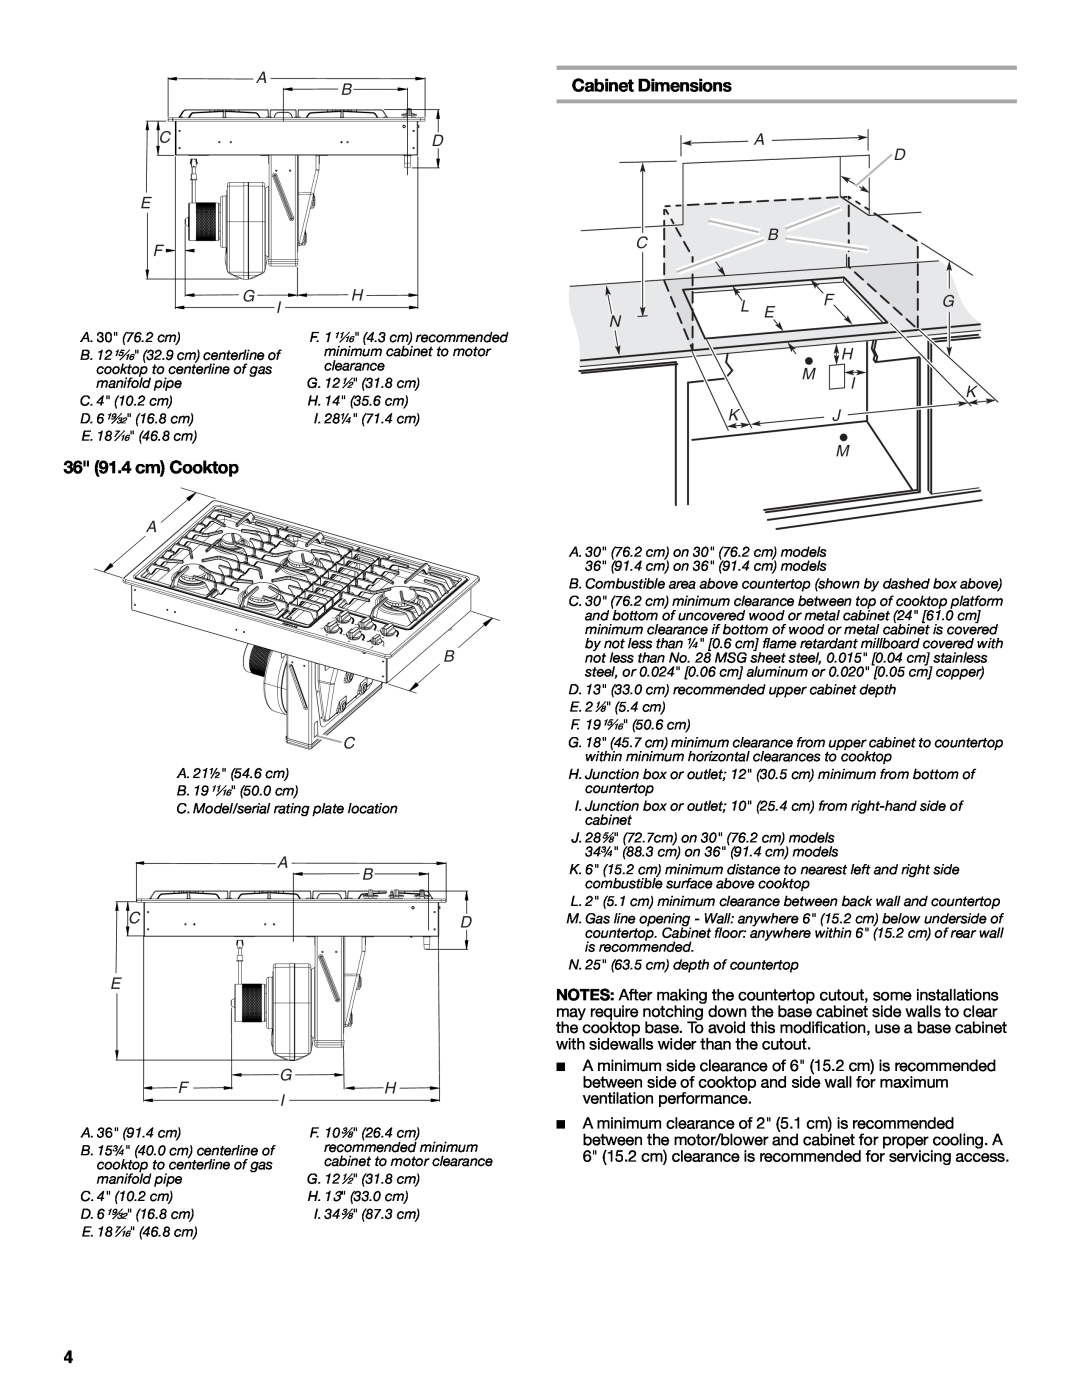 Jenn-Air W10197058B installation instructions Cabinet Dimensions, 36 91.4 cm Cooktop, A B Cd E F, A D C B, L E Fg N H M Ik 